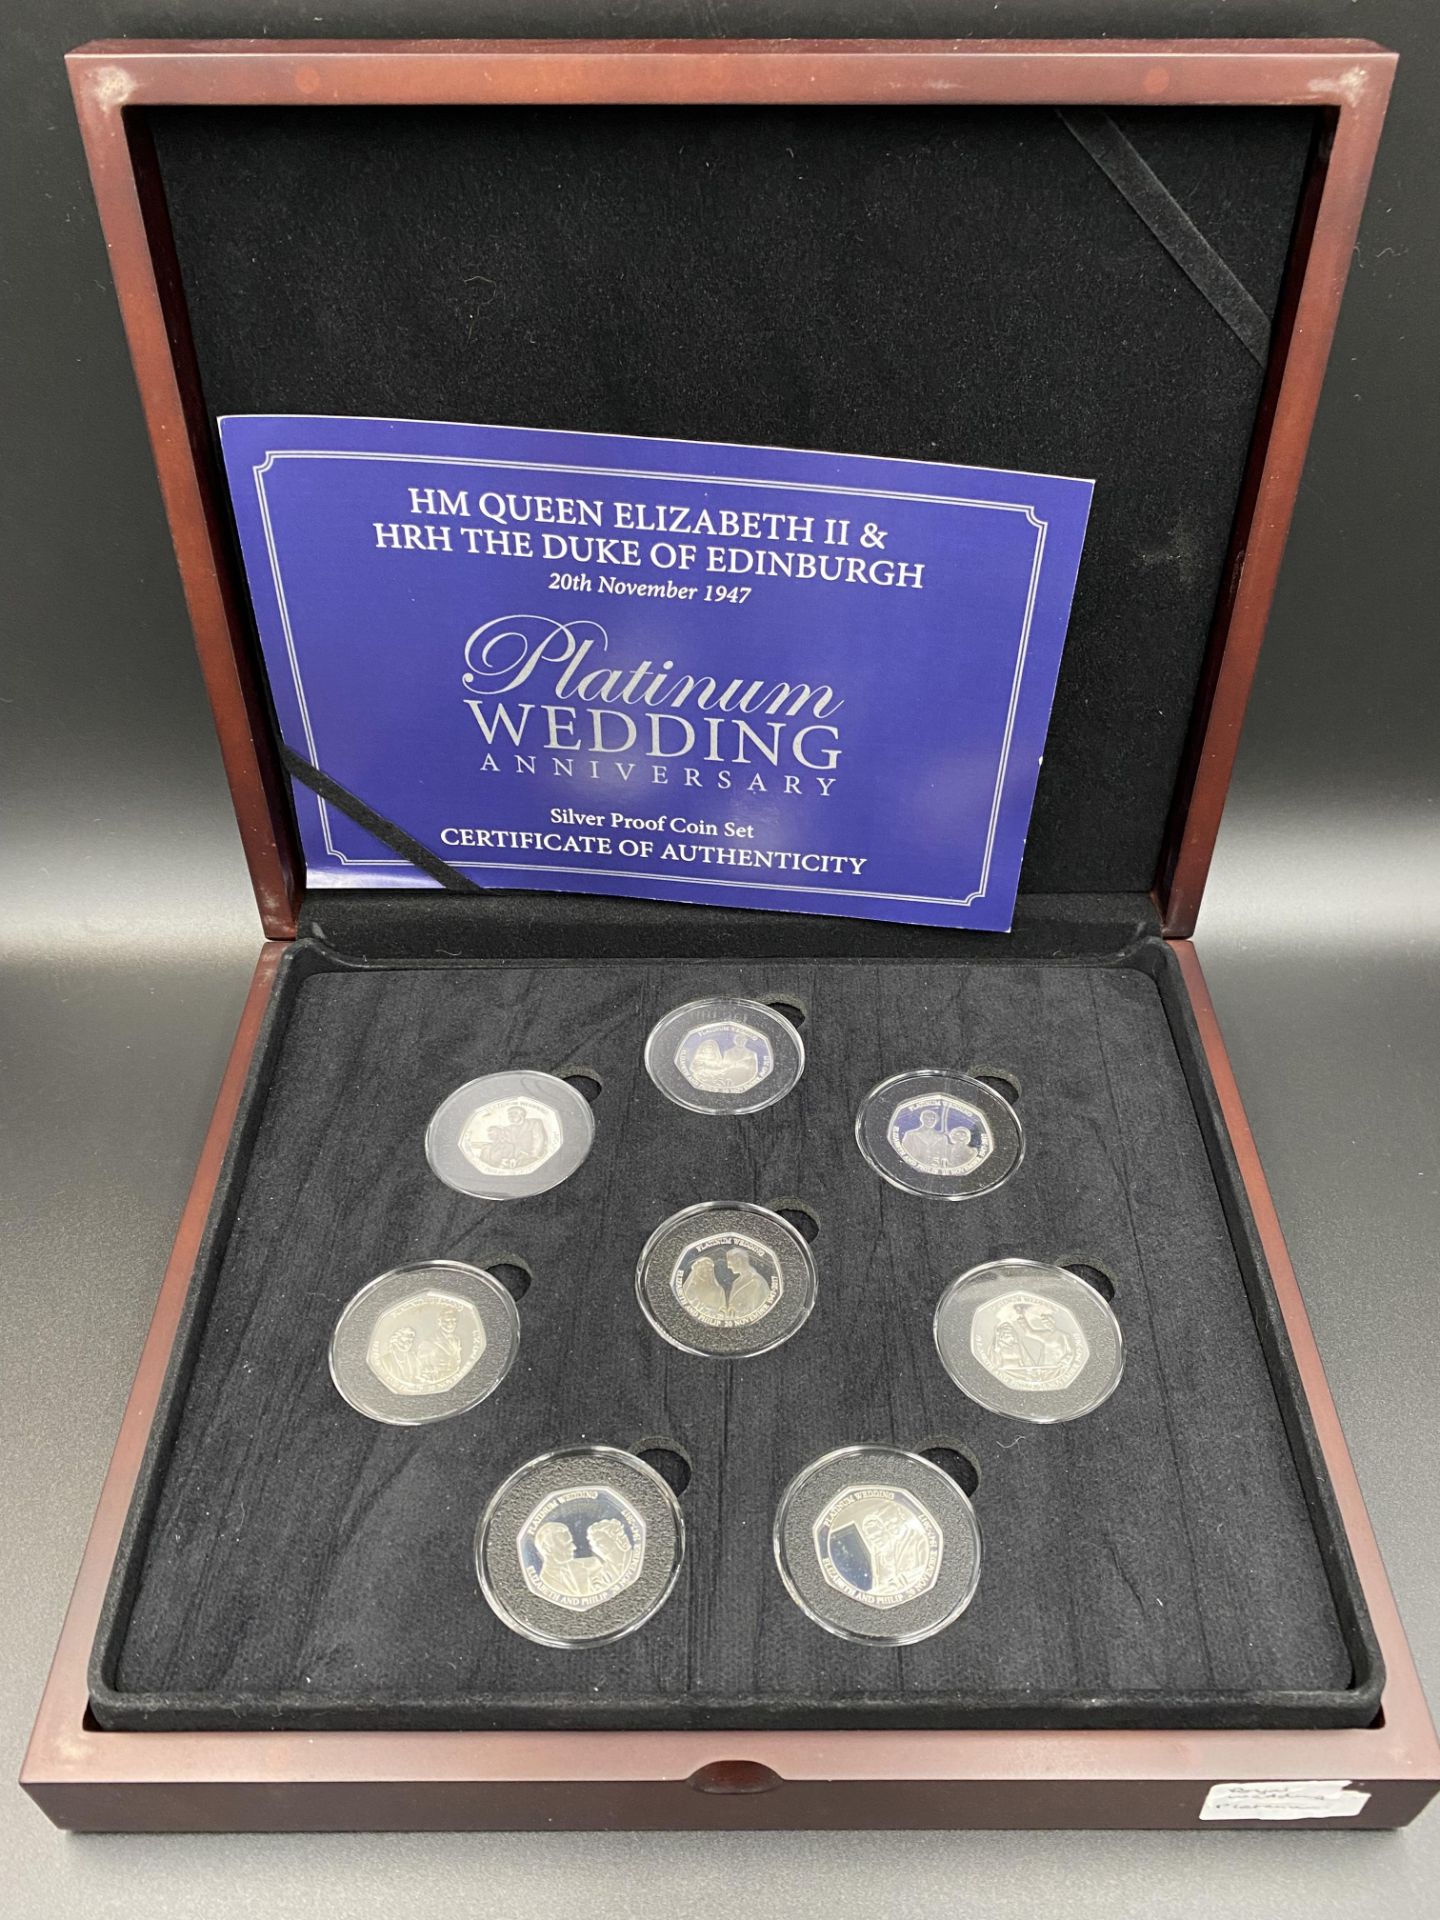 Queen Elizabeth Platinum Wedding Anniversary silver proof coin set - Image 2 of 8